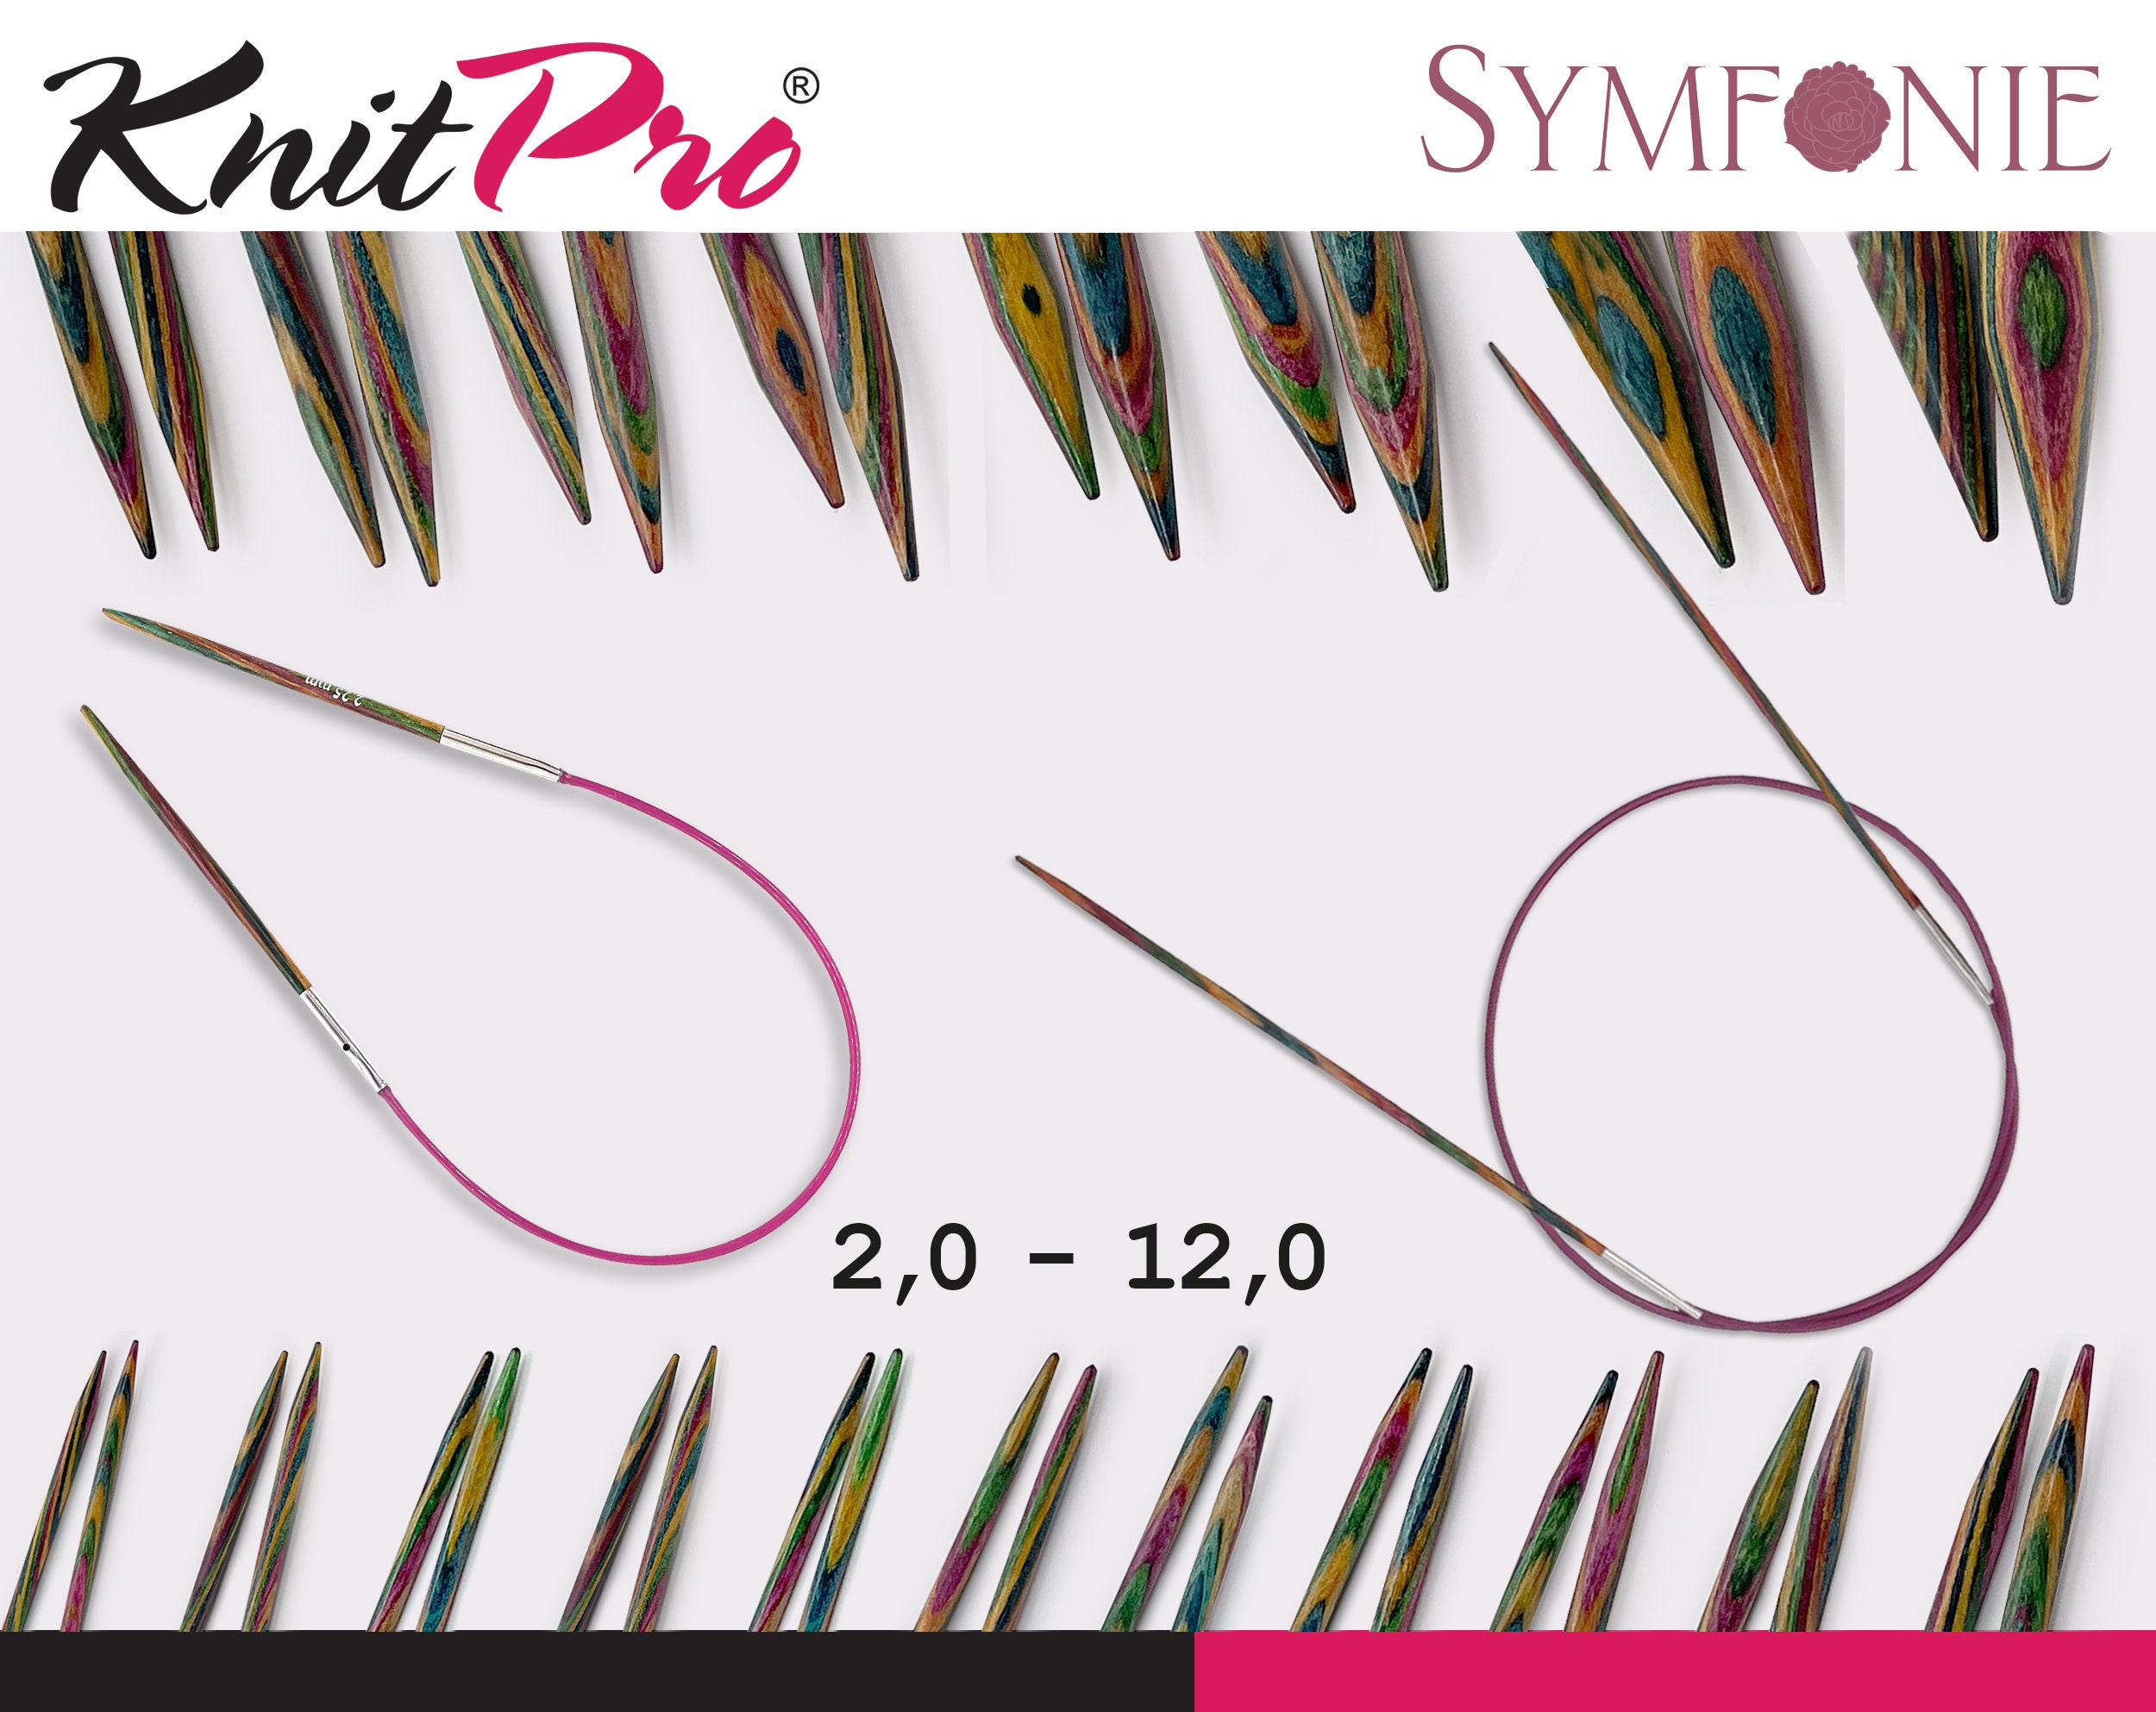 Symfonie Short Interchangeable Circular Needles in Birch, Knitting Needles